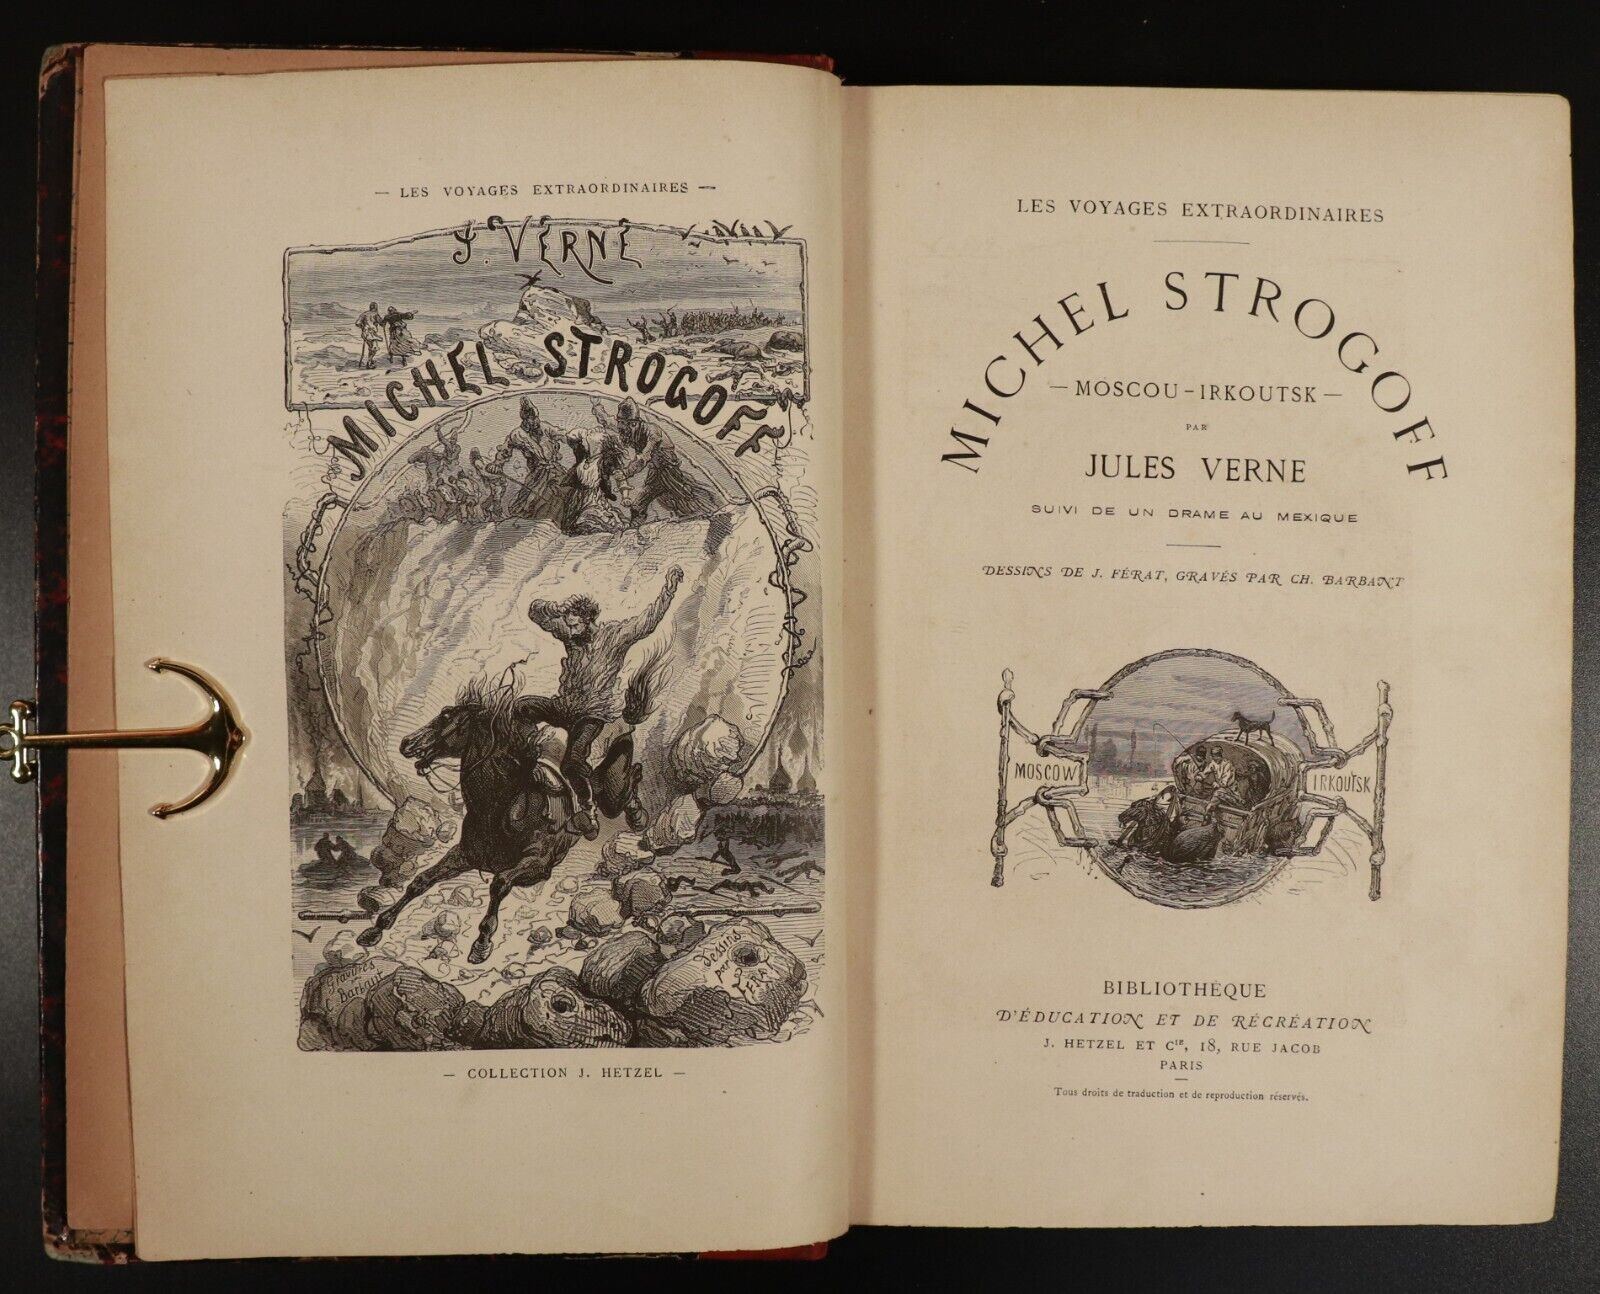 c1880 Michel Strogoff de Moscou a Irkoutsk Jules Verne Antiquarian Fiction Book - 0